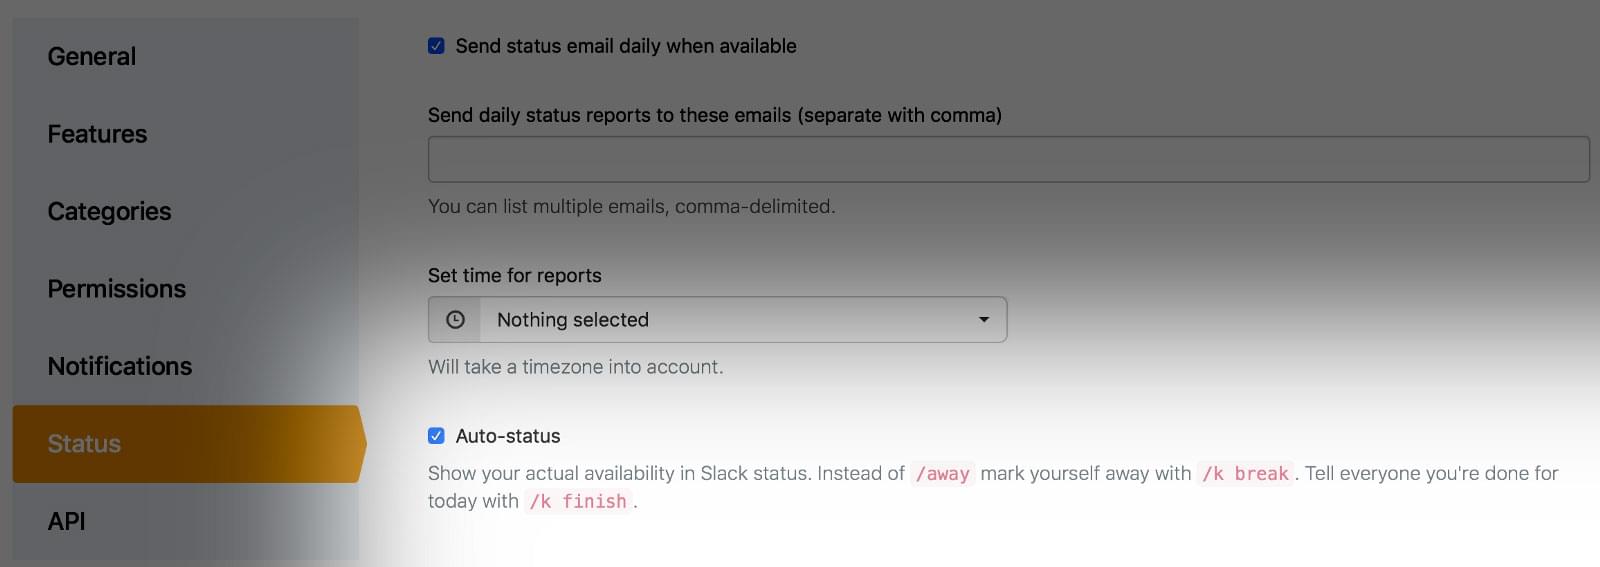 status options screenshot